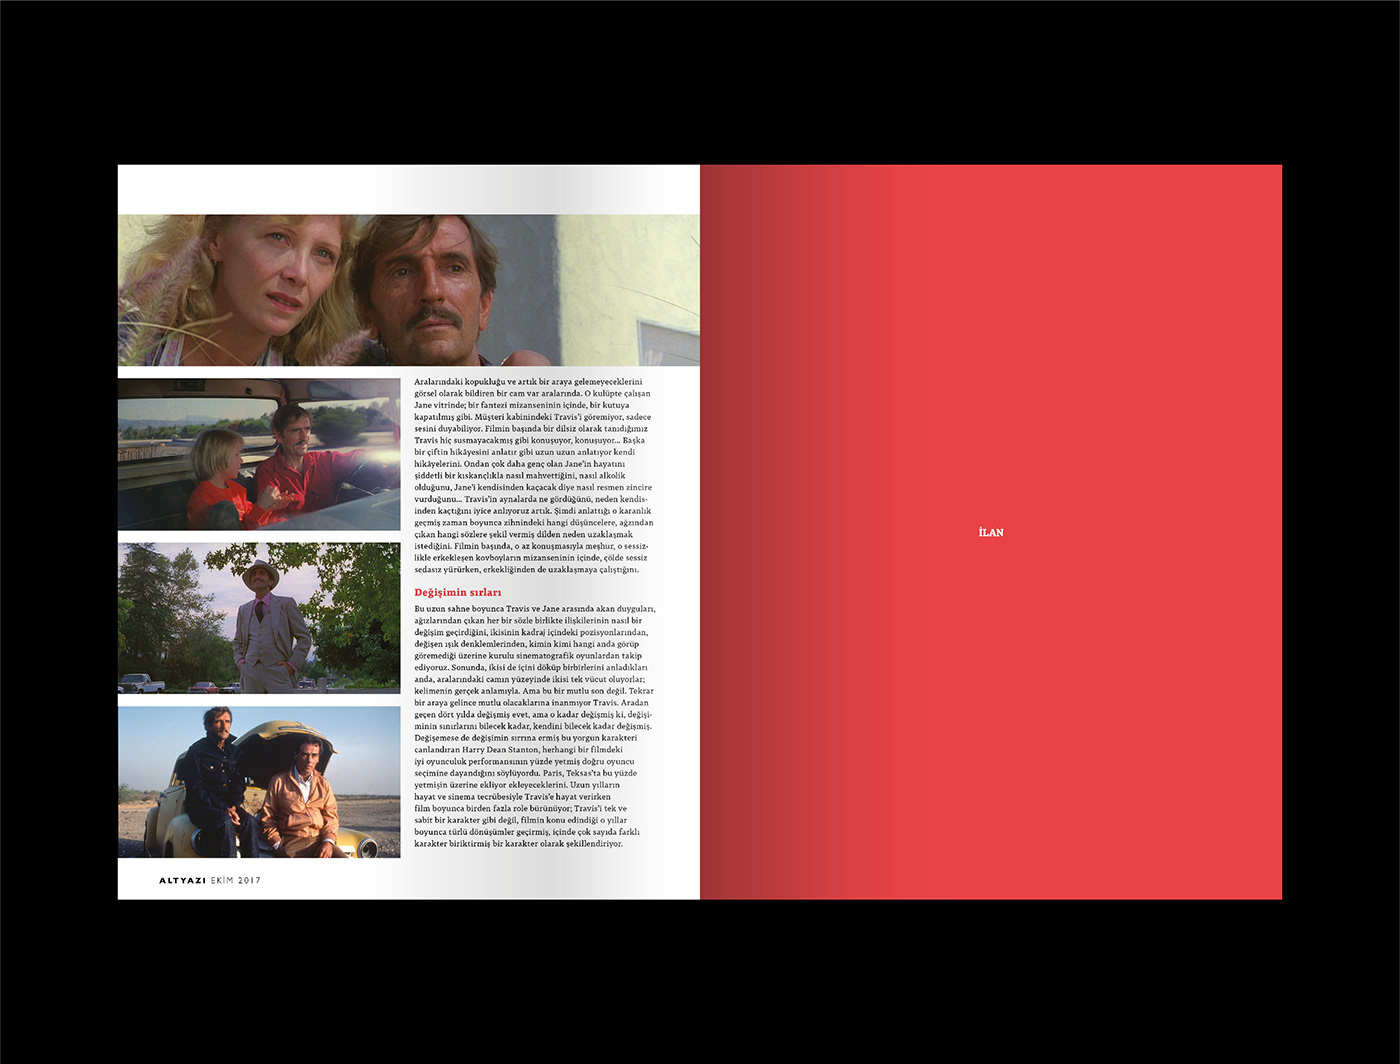 cinemamagazine magazine Magazine design